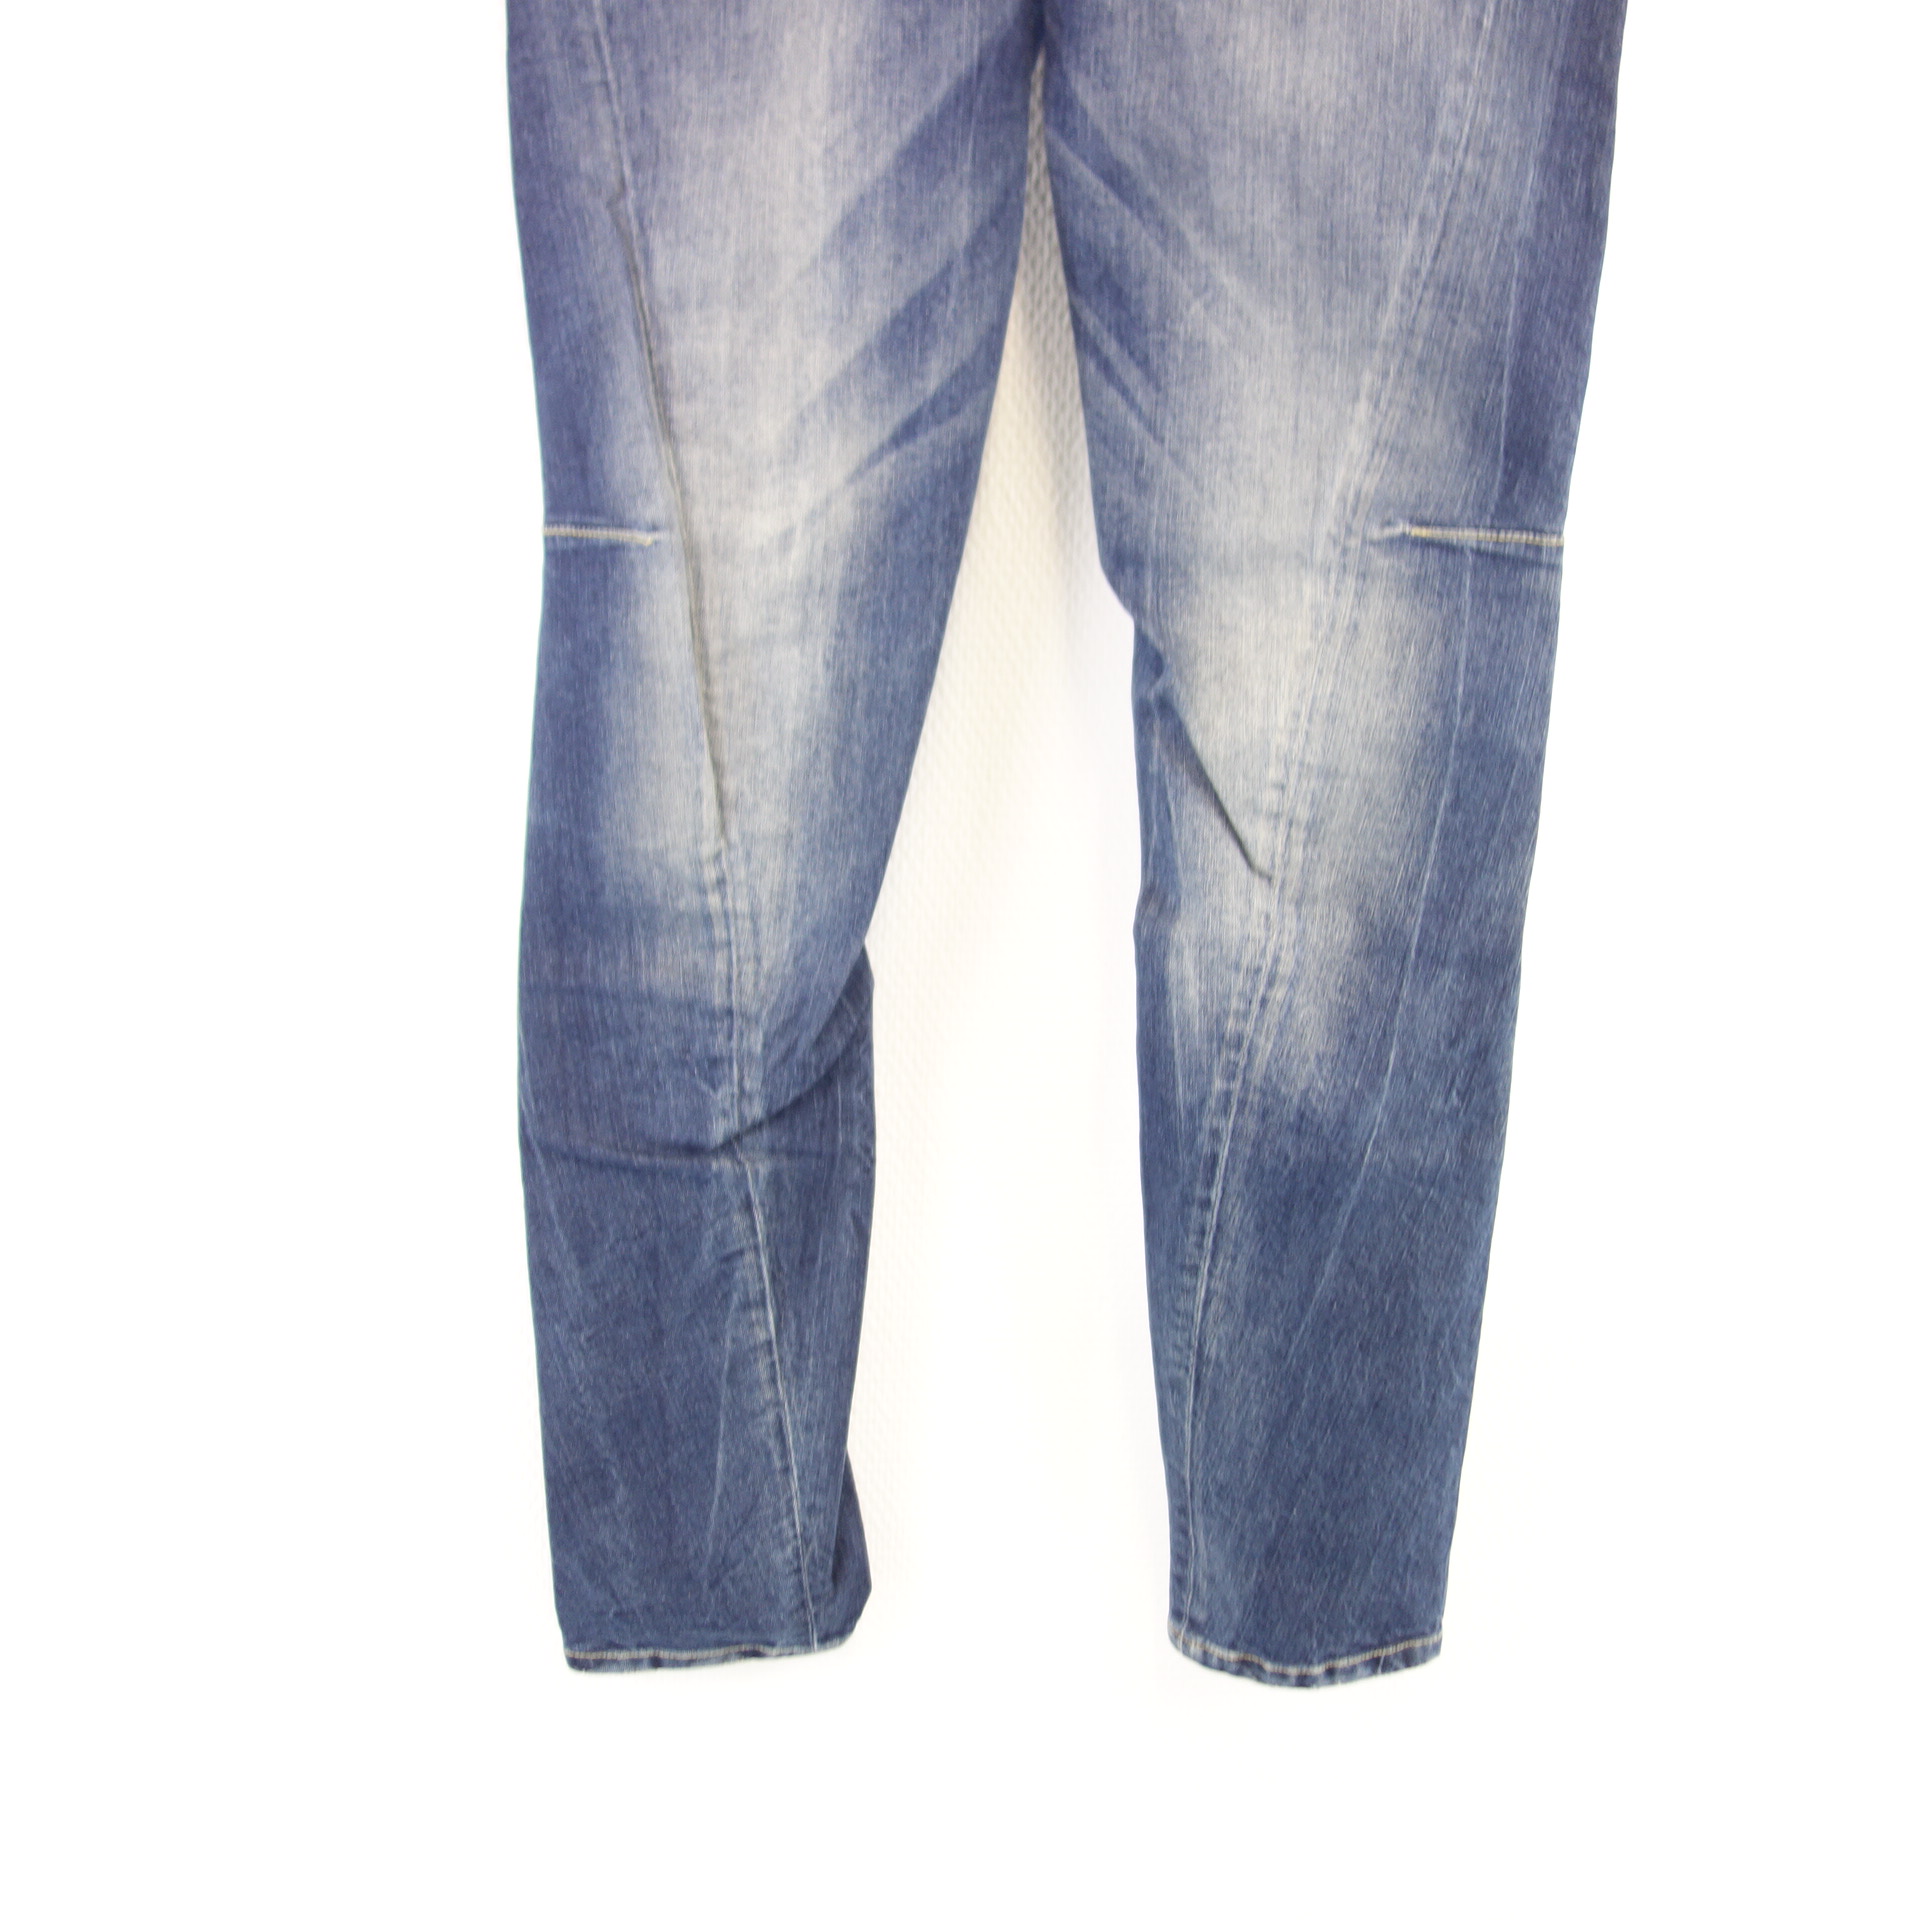 ADENAUER & CO Jeans Hose Dunkelblau Modell Britta Used Tapered Leg